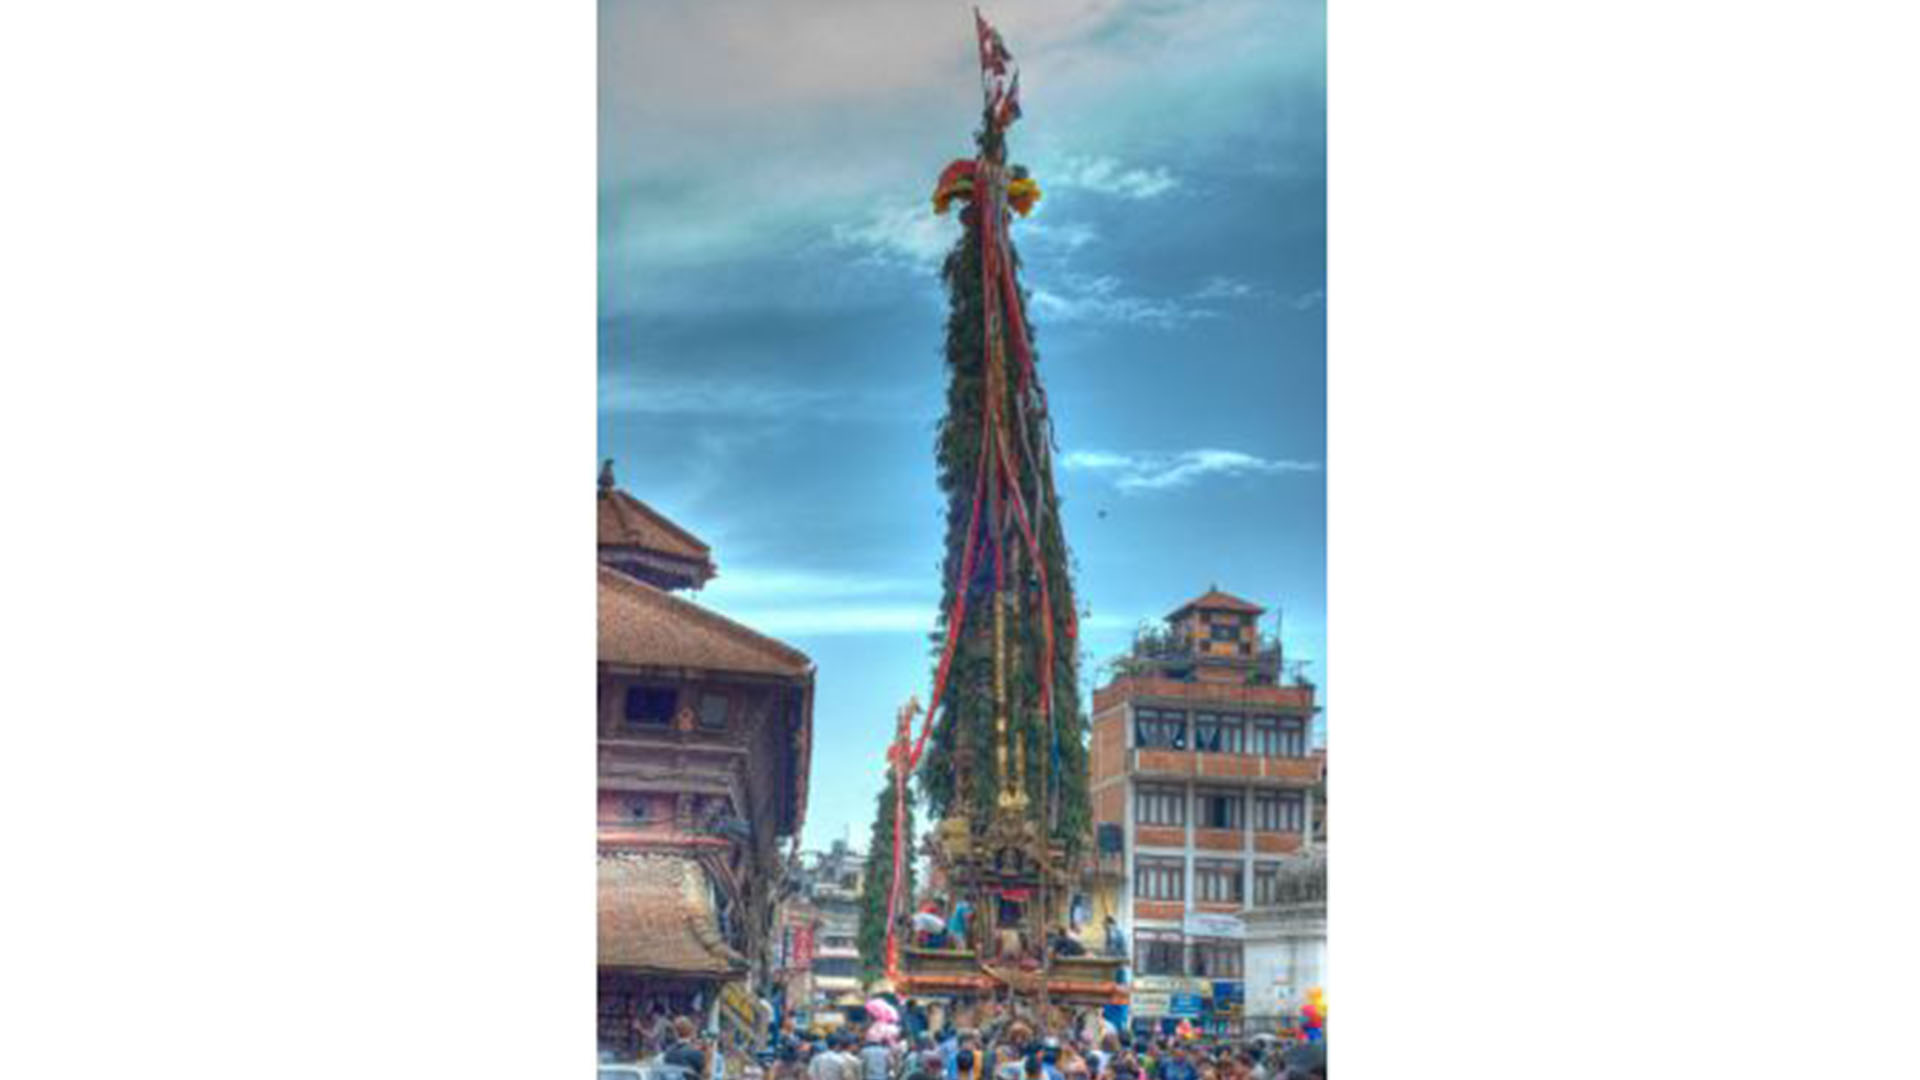 Rato Machhindranath taken to Bungmati - No ‘Bhoto’ Display this year